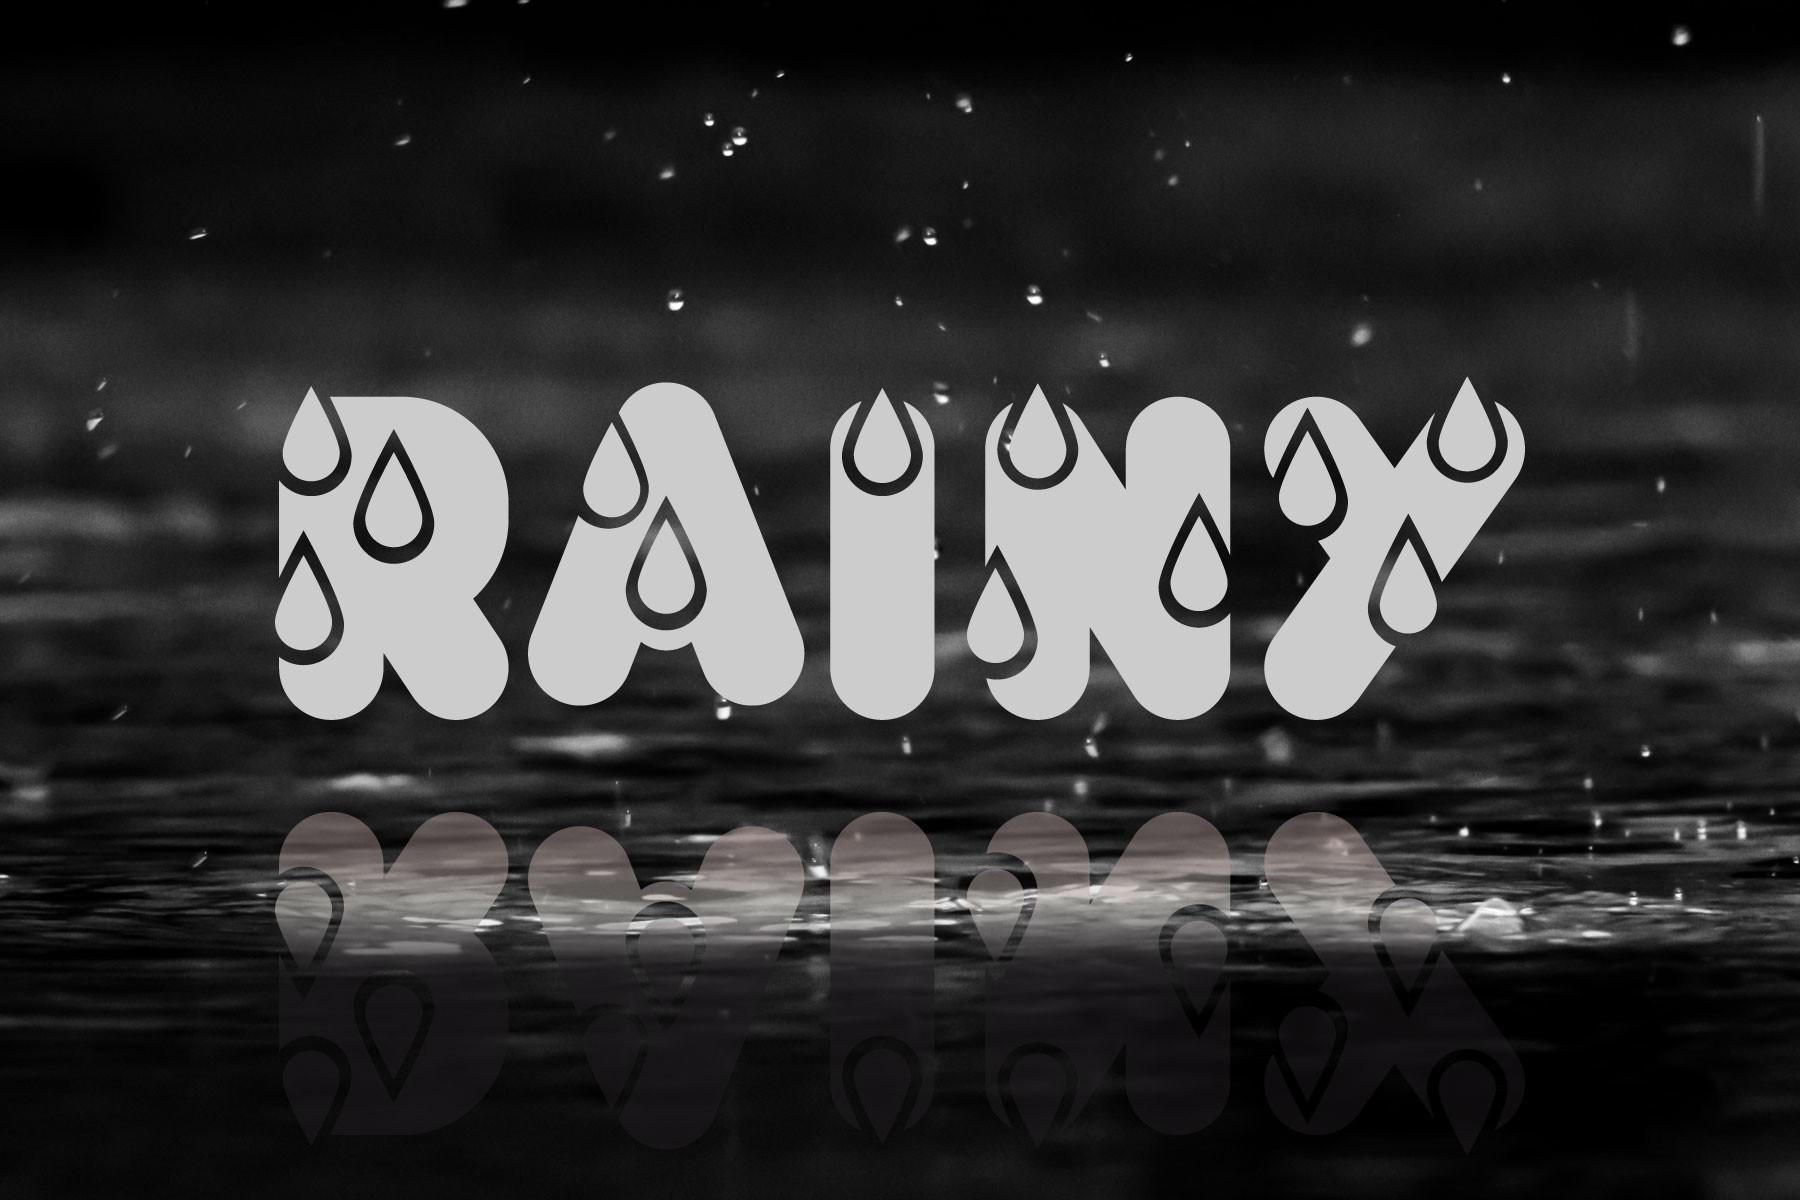 Rainy Font